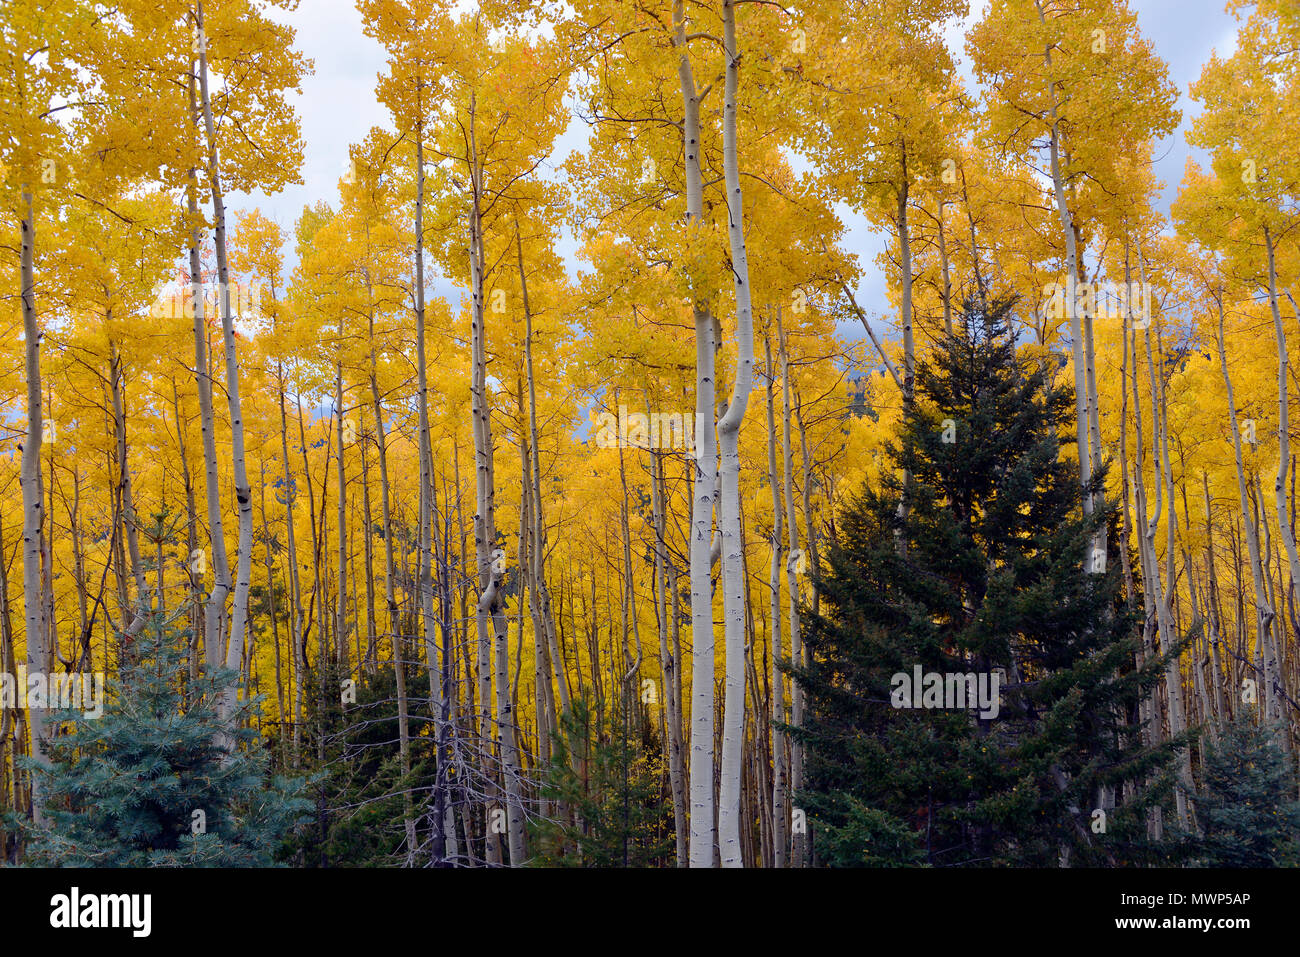 Santa Fe National Forest, grove (likely a single clone) of aspens in gold fall foliage, Santa Fe, NM, USA Stock Photo